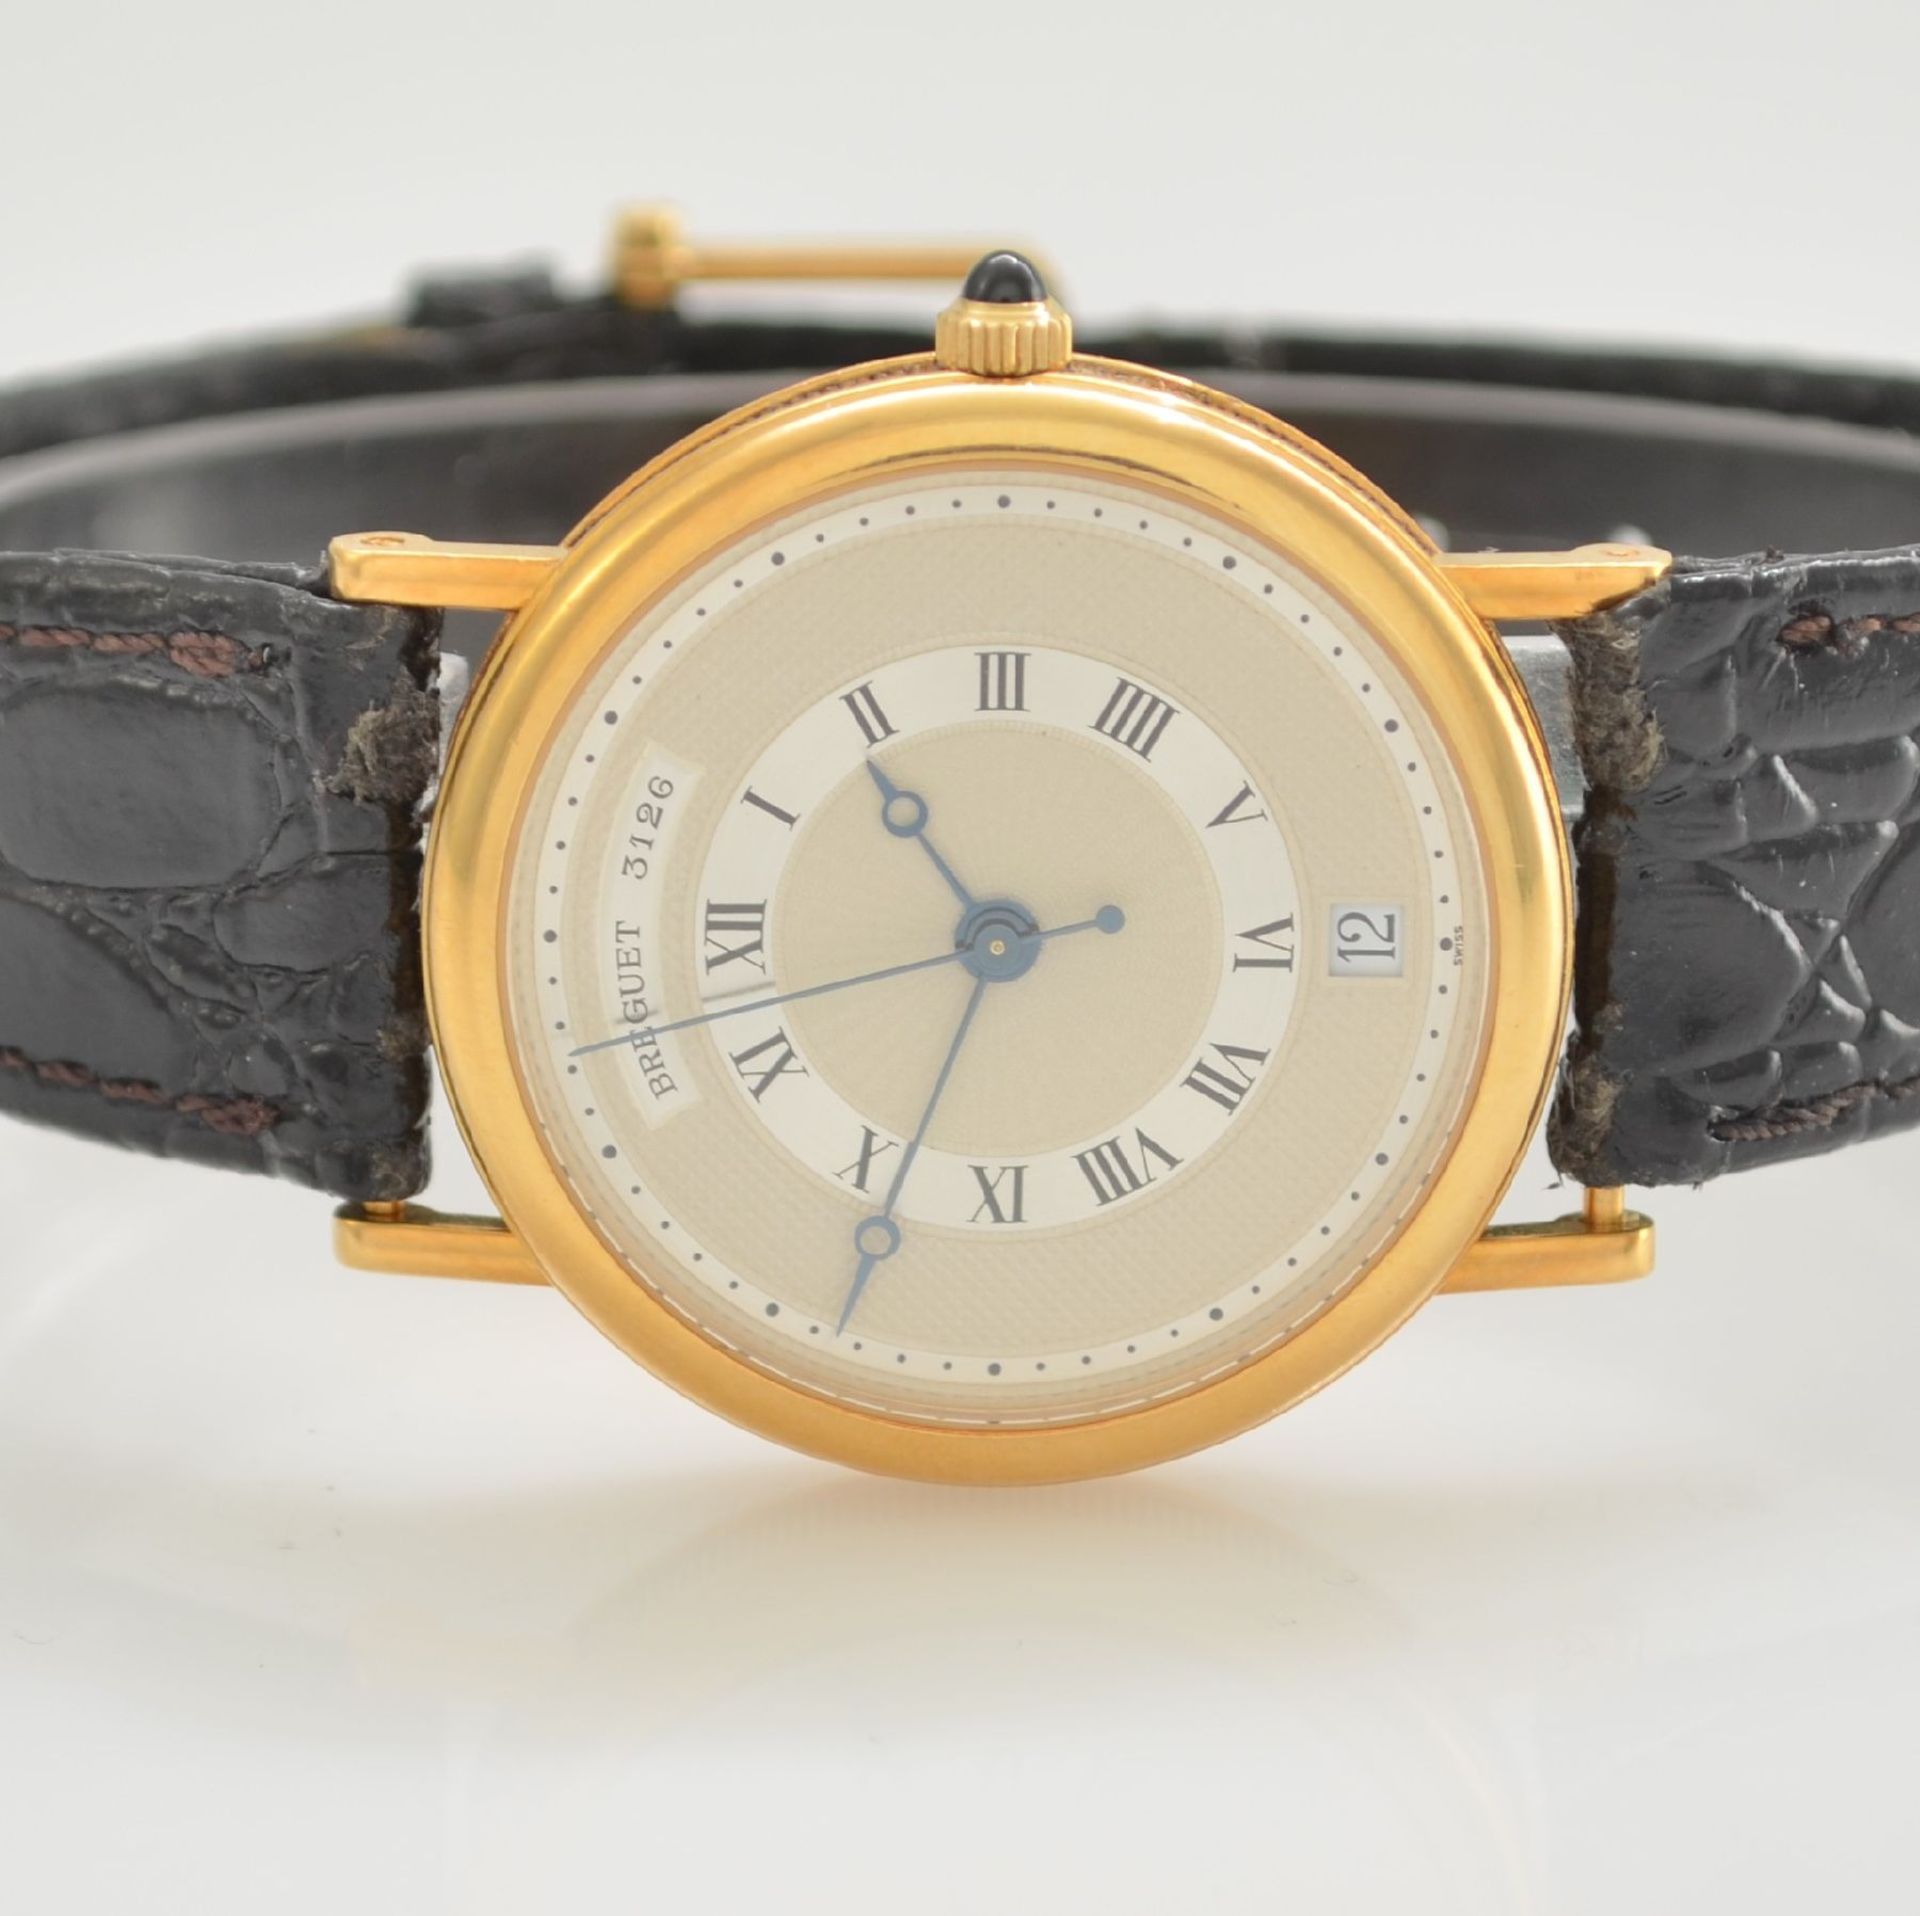 BREGUET Classique Armbanduhr in GG 750/000 No. 3126, Schweiz um 1990, 3-teil. Geh. inkl. Lederband - Bild 2 aus 6